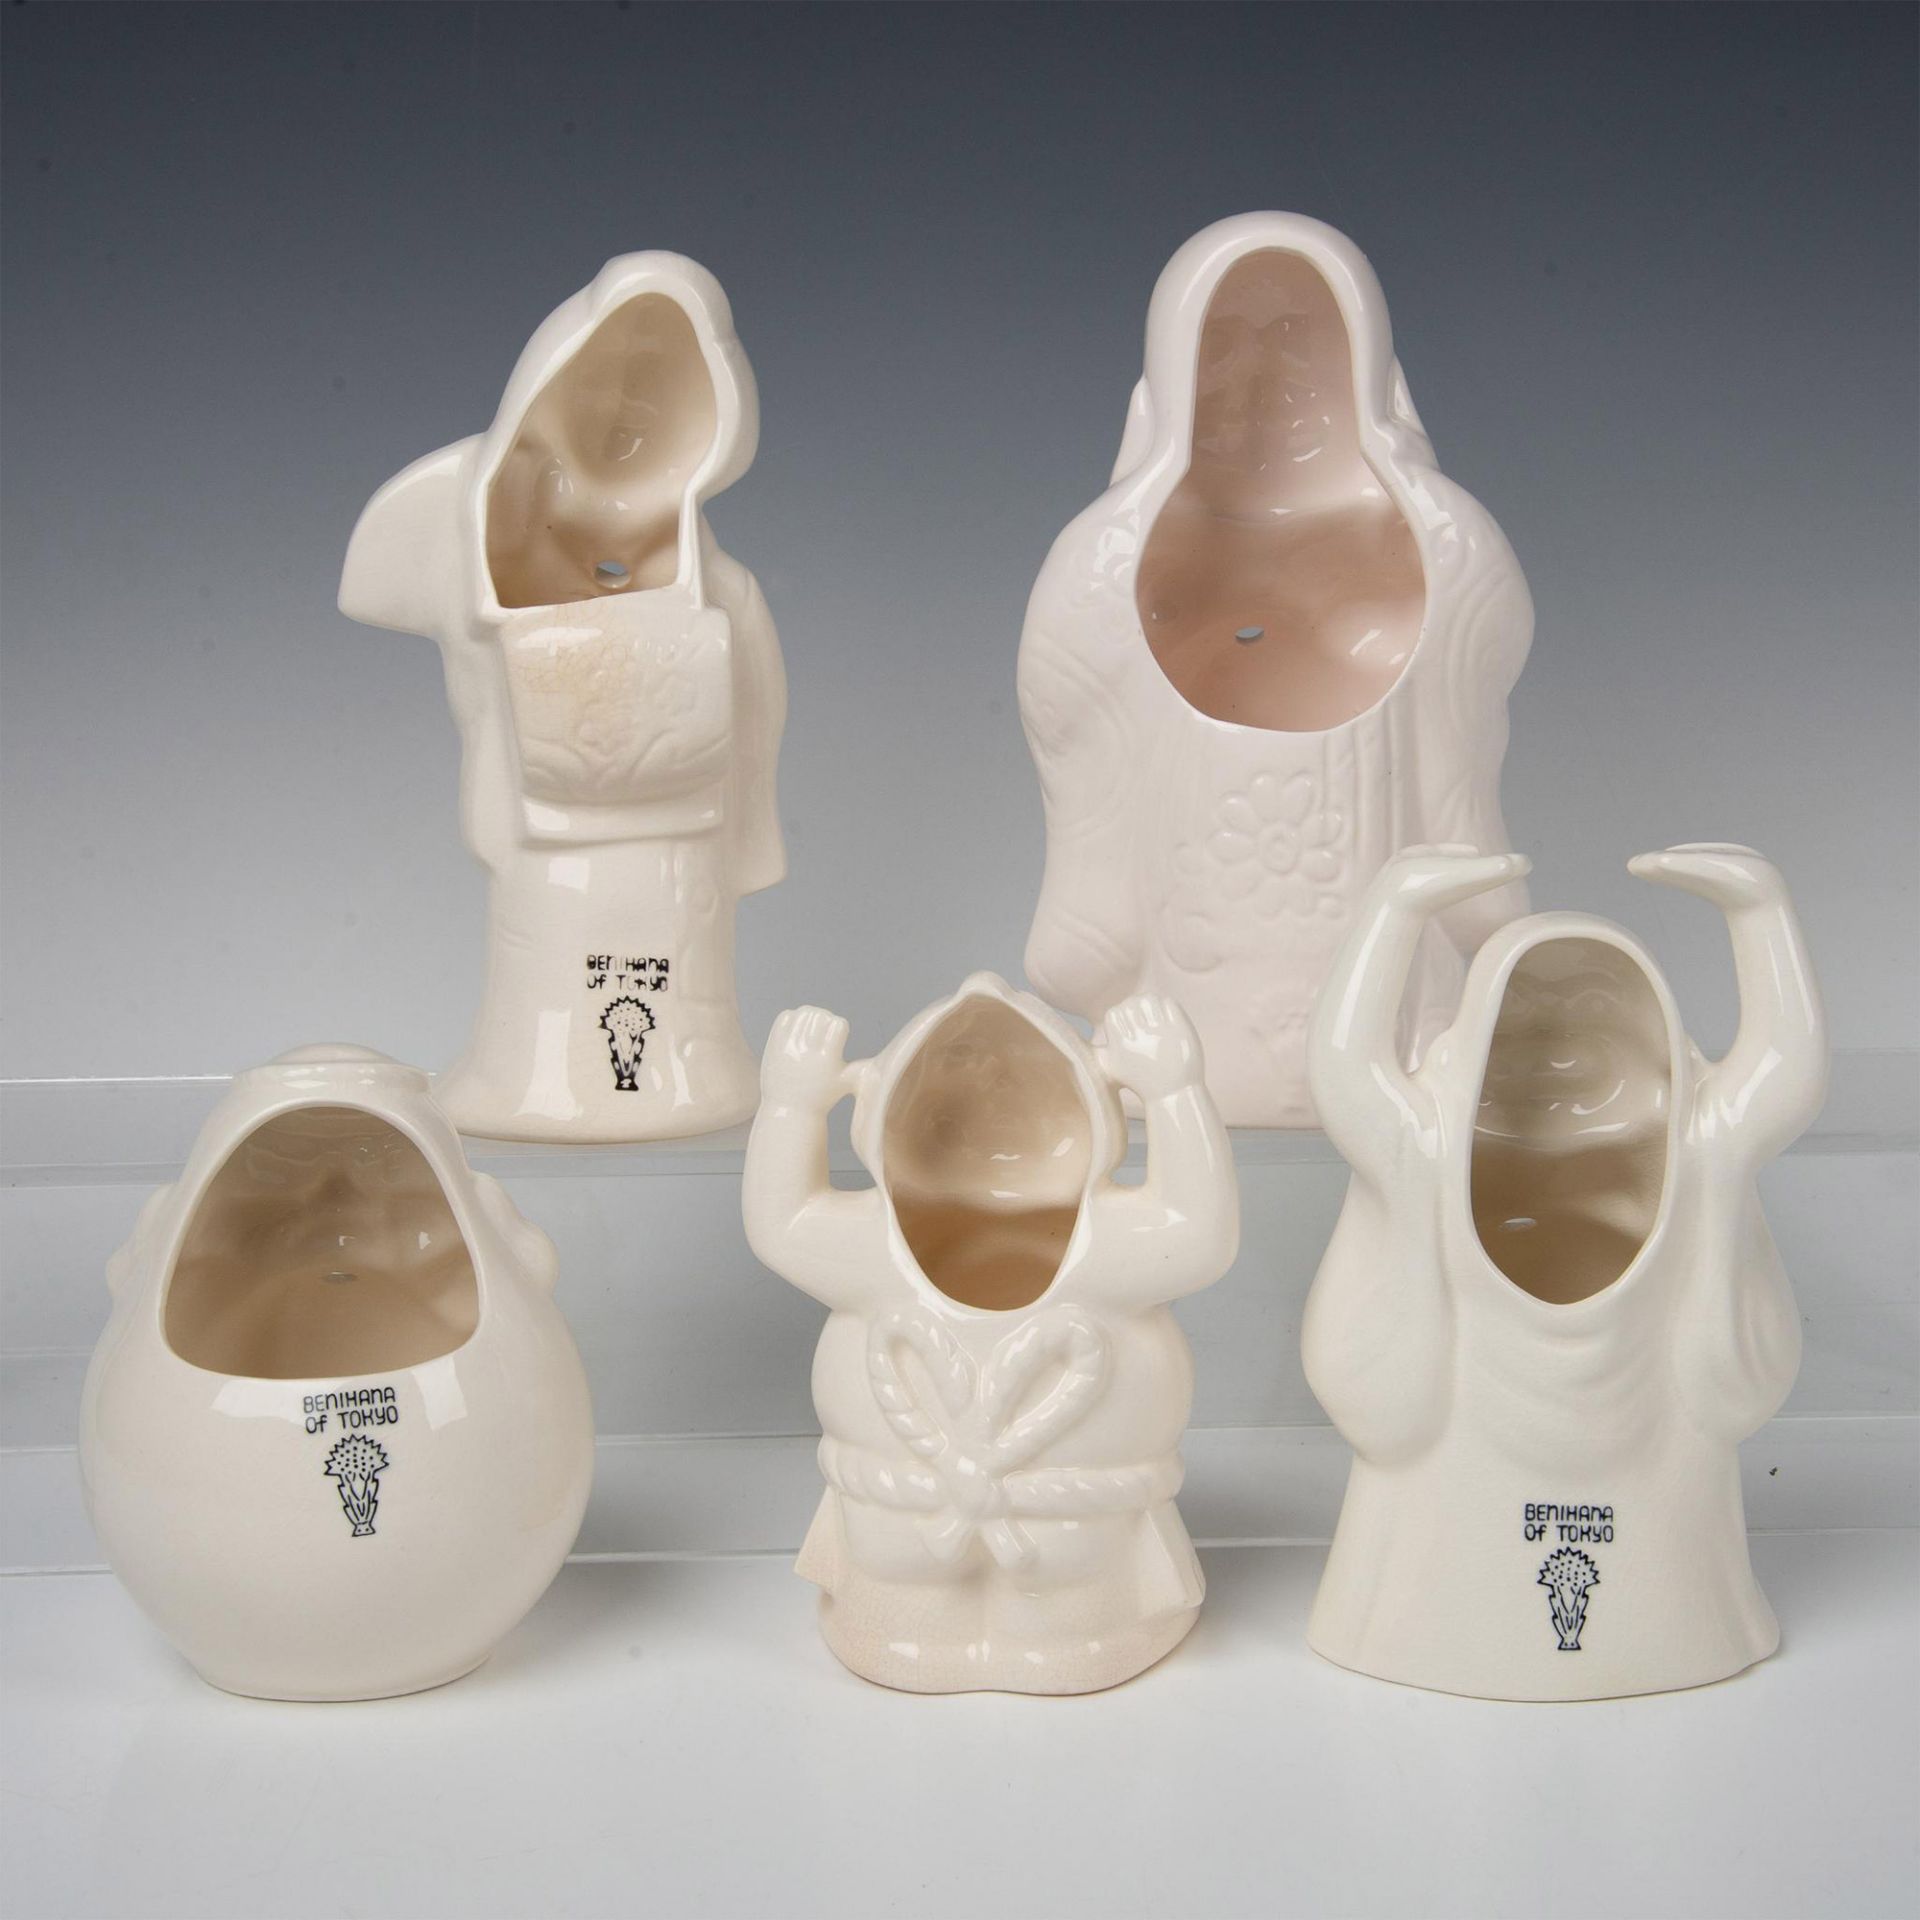 5pc Grouping of Vintage Benihana Figural Mugs - Image 2 of 3